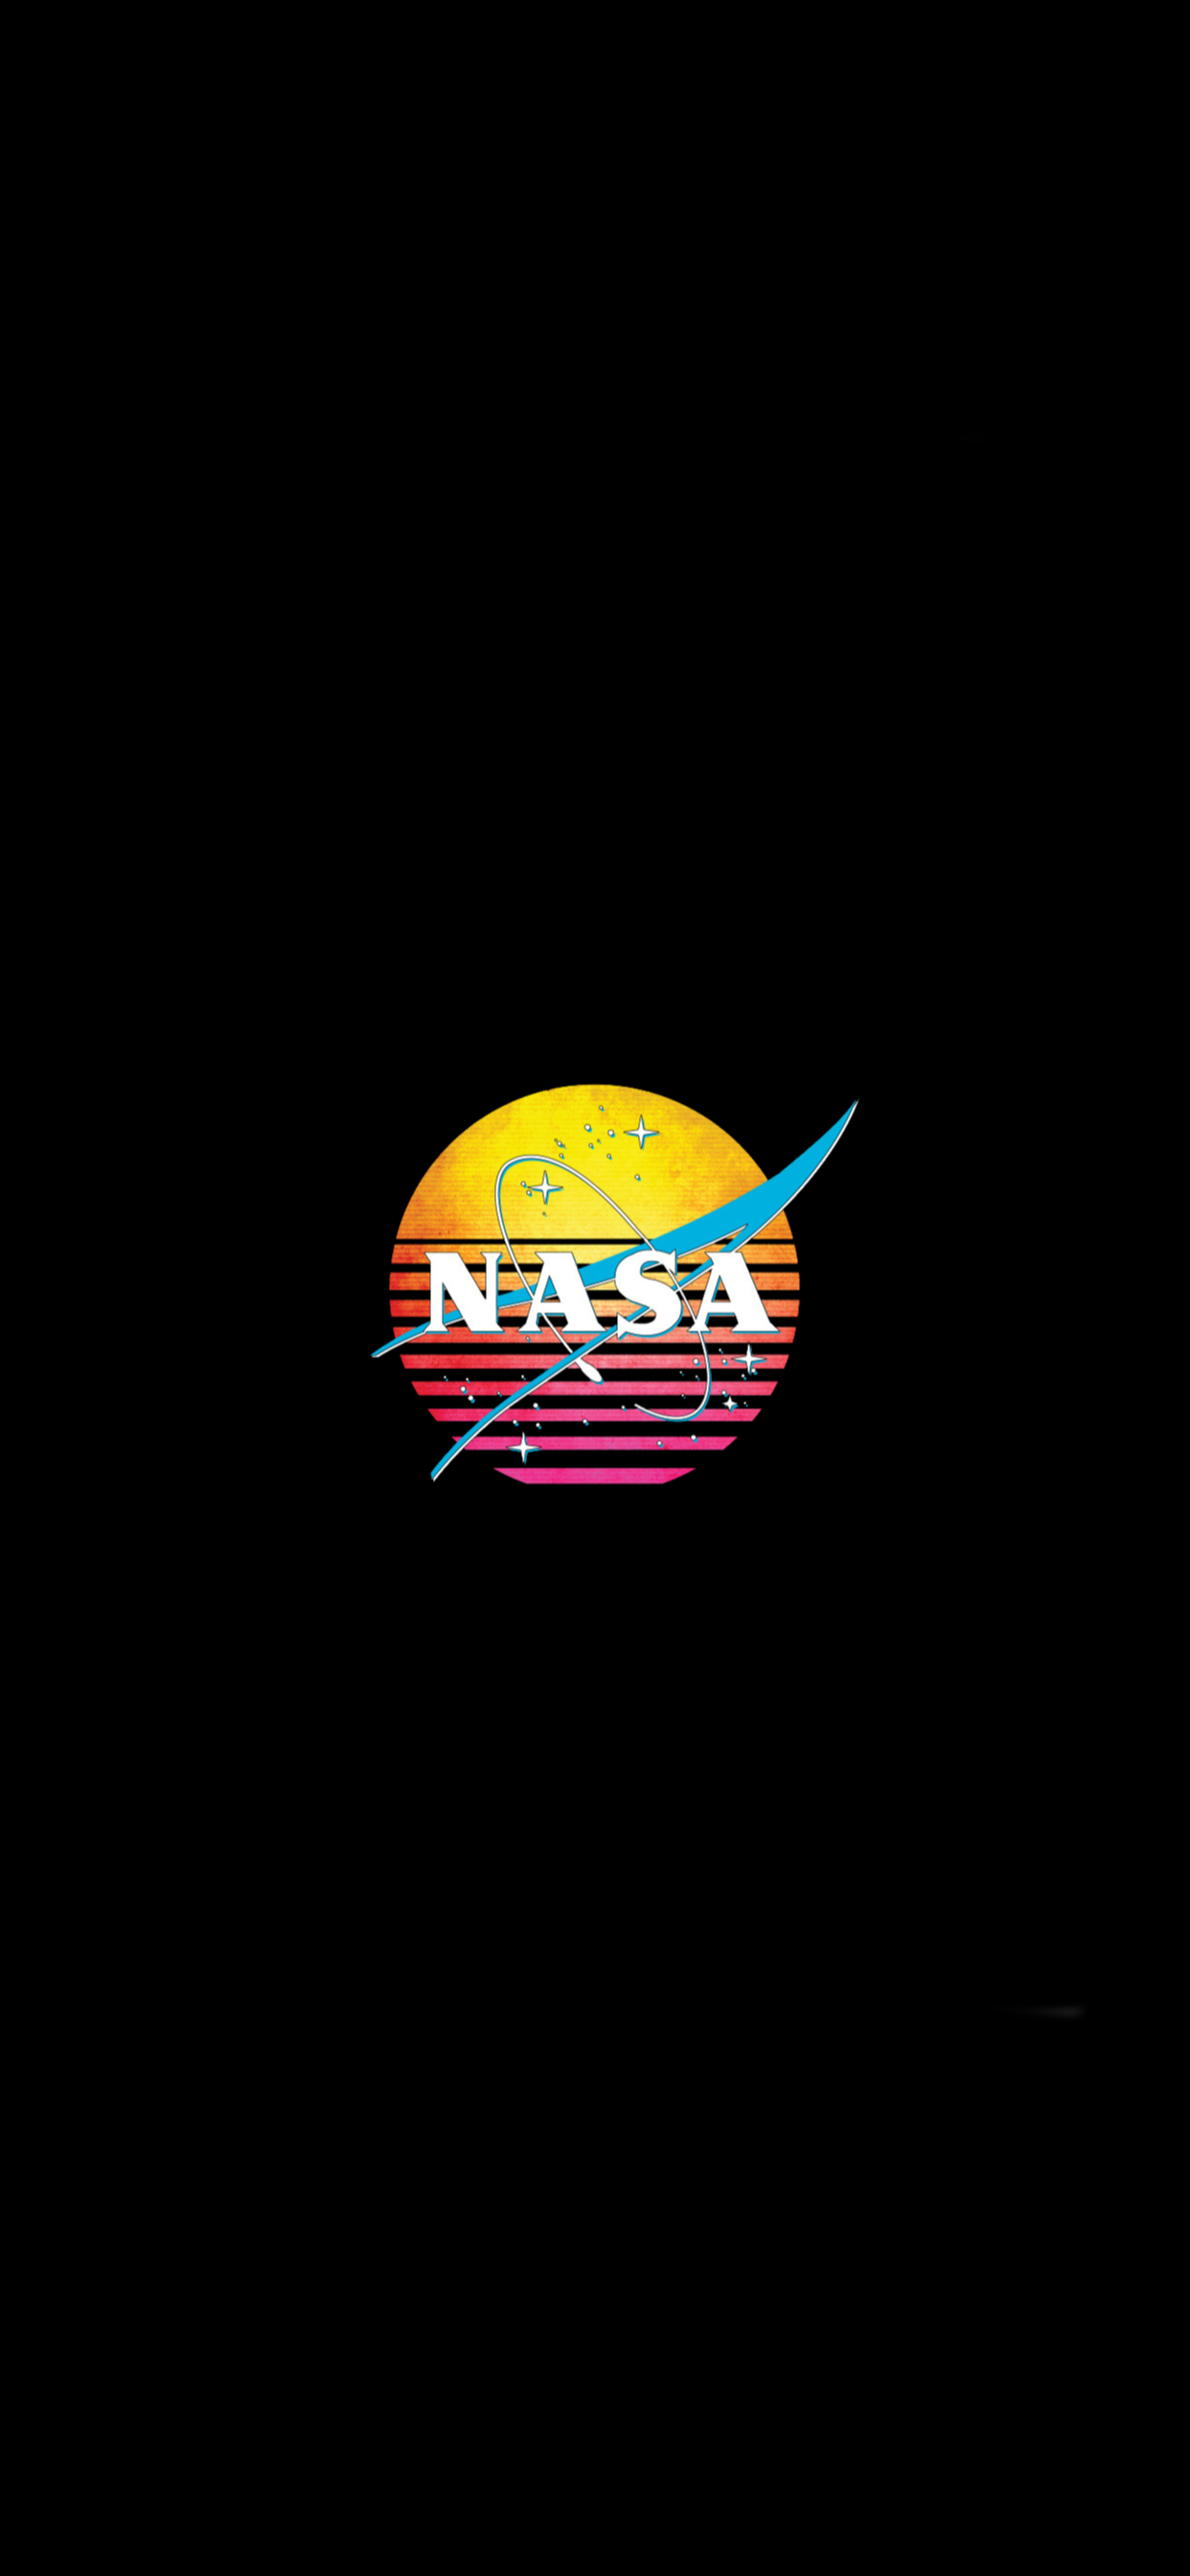 NASA iPhone Wallpaper Free NASA iPhone Background